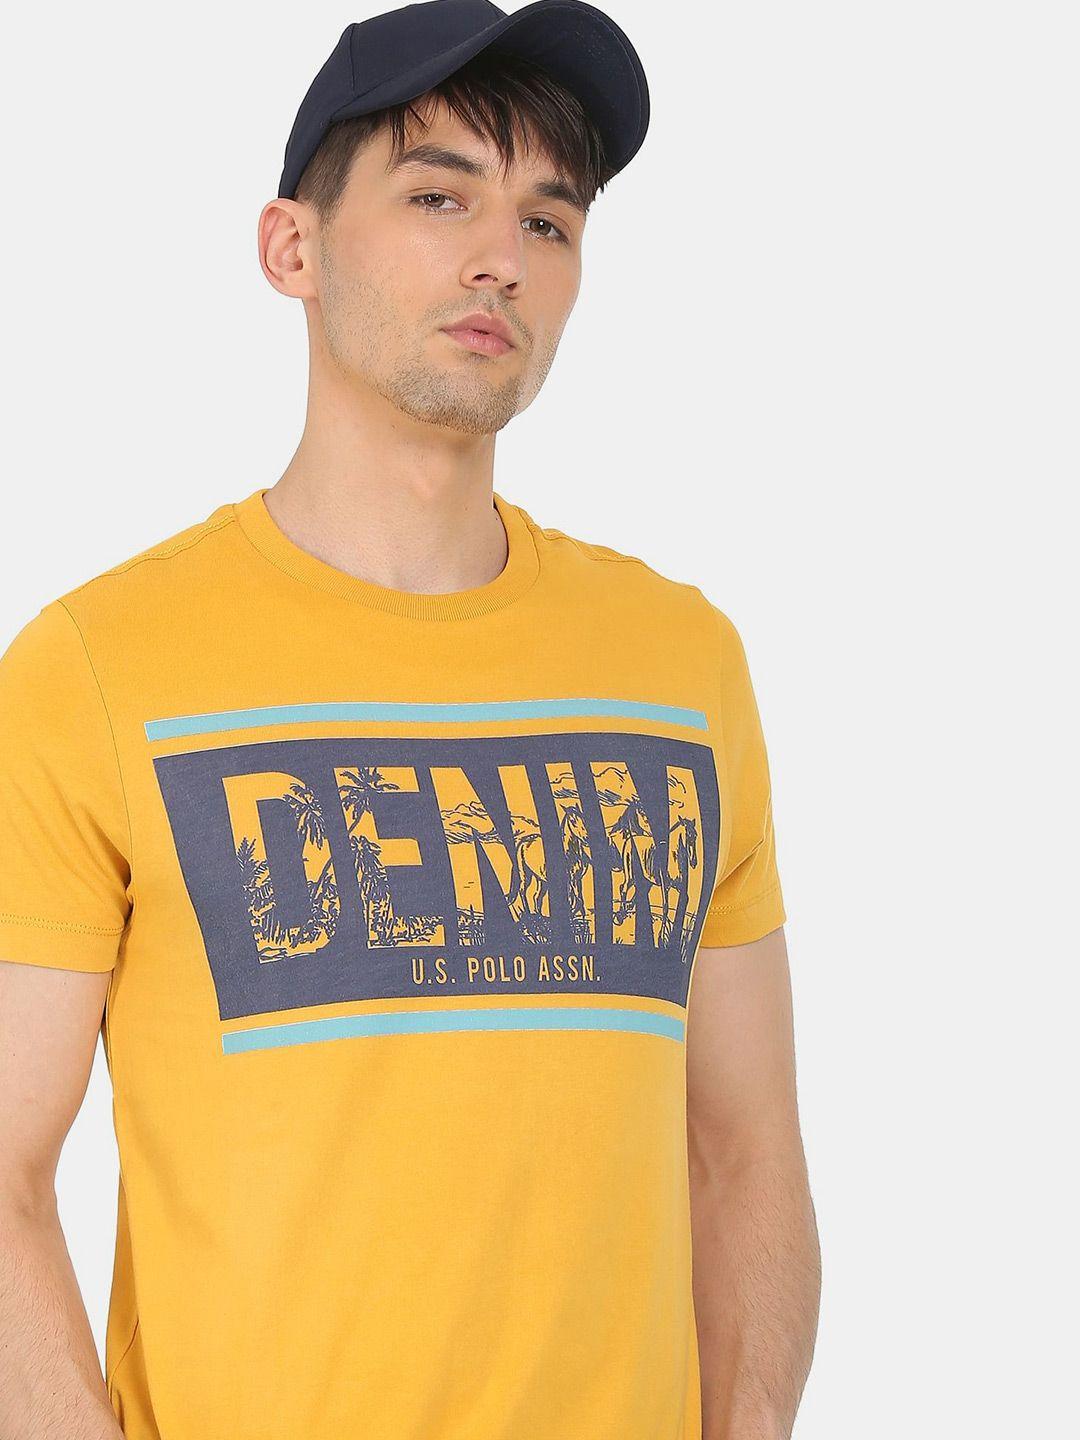 u-s-polo-assn-denim-co-men-yellow-typography-printed-pure-cotton-t-shirt